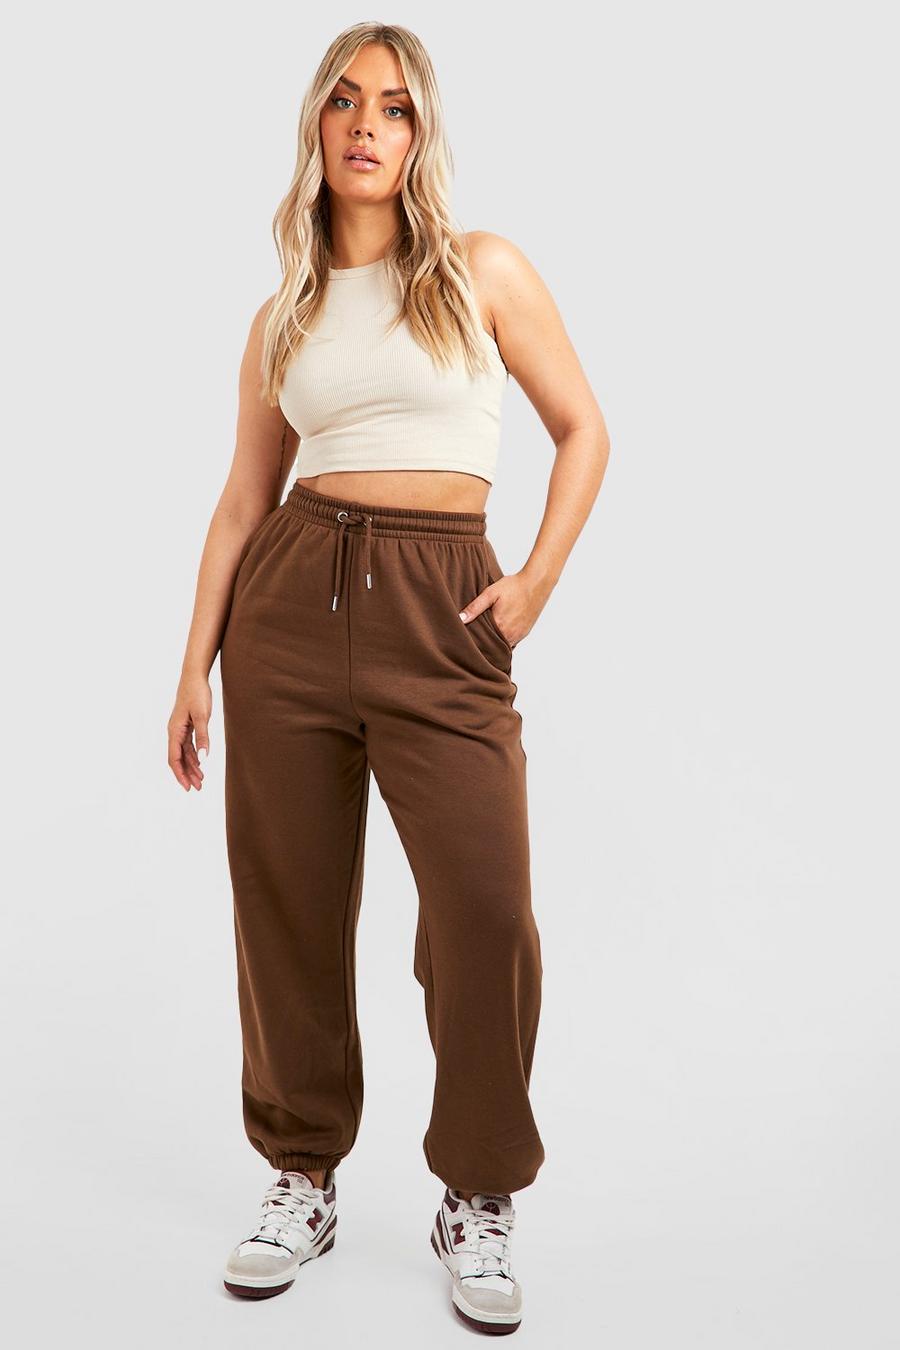 Plus Size Pants | Plus Size Women's Pants | boohoo USA